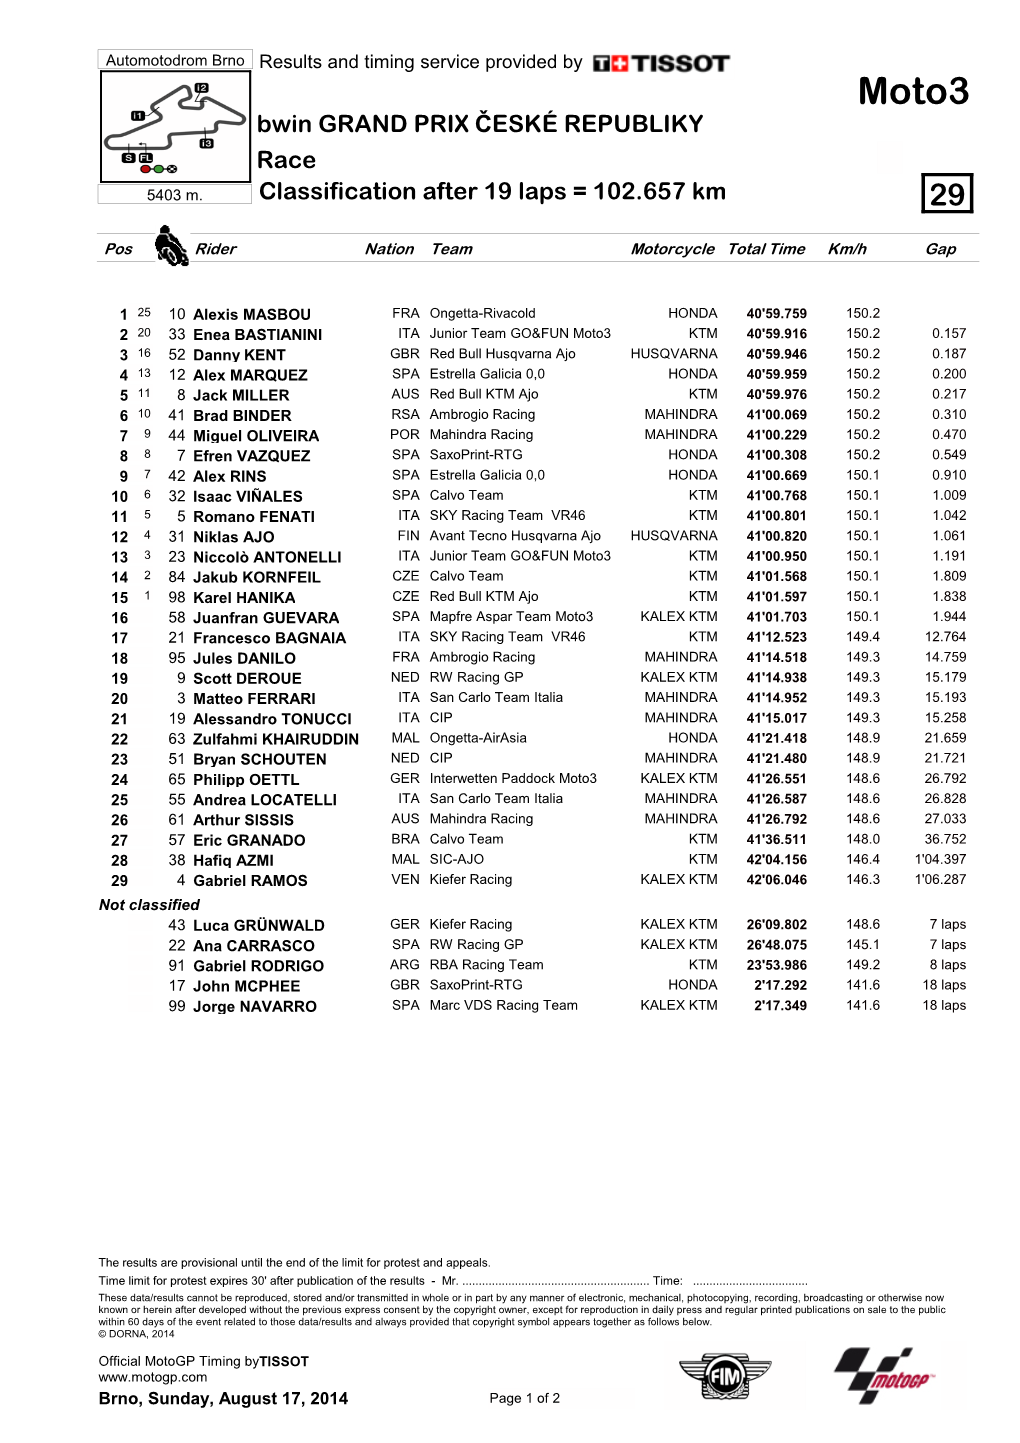 Moto3 Bwin GRAND PRIX ČESKÉ REPUBLIKY Race 5403 M